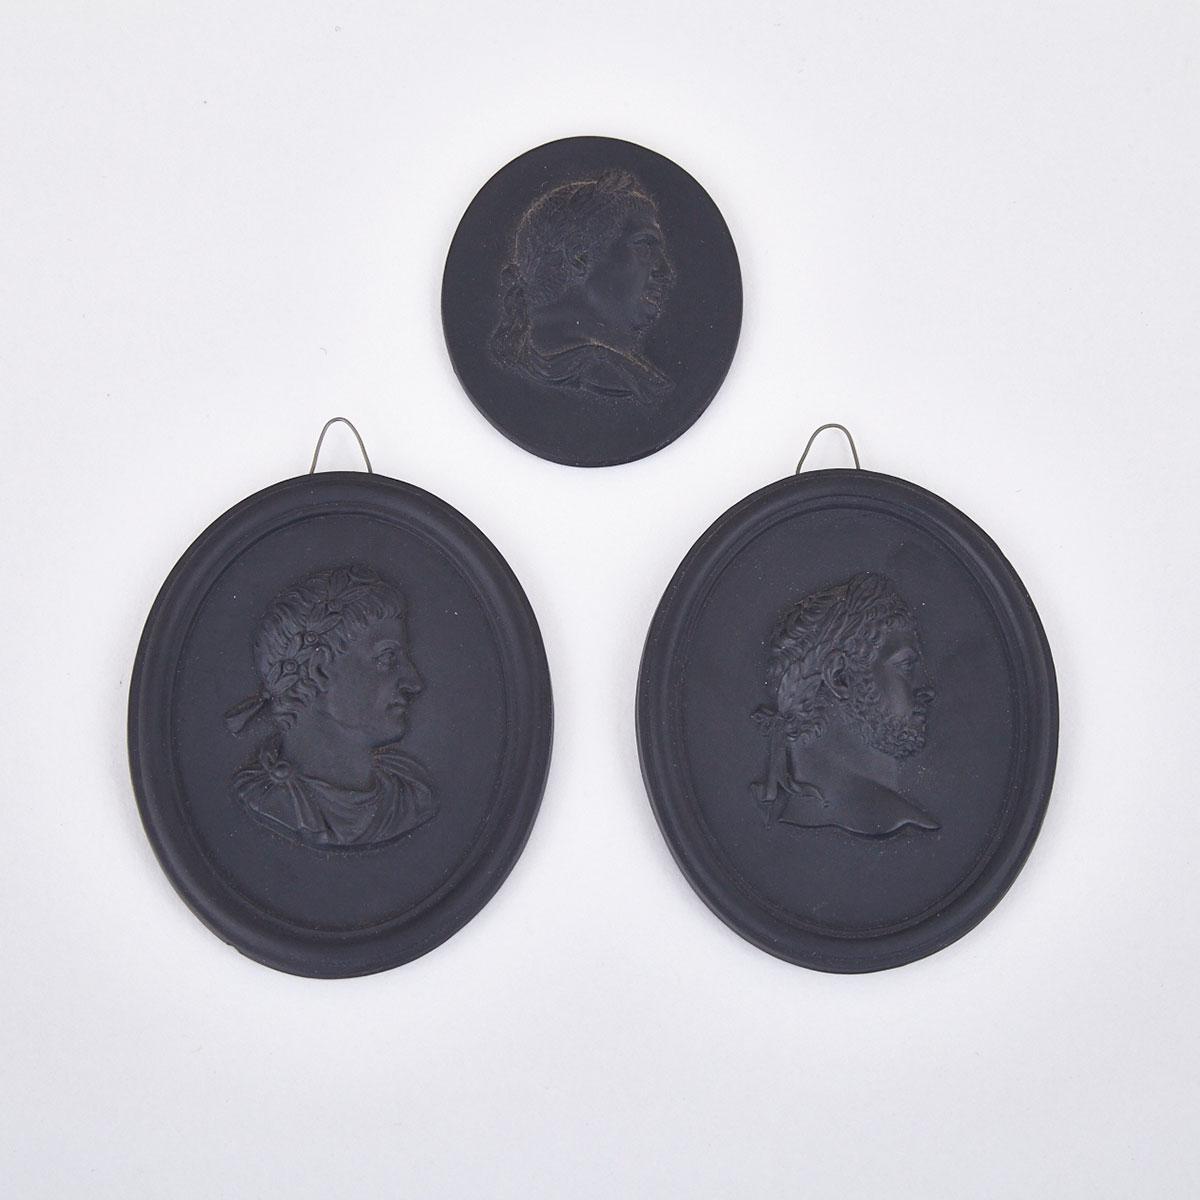 Three Wedgwood Black Basalt Oval Portrait Medallions of Roman Emperors, late 18th/19th century